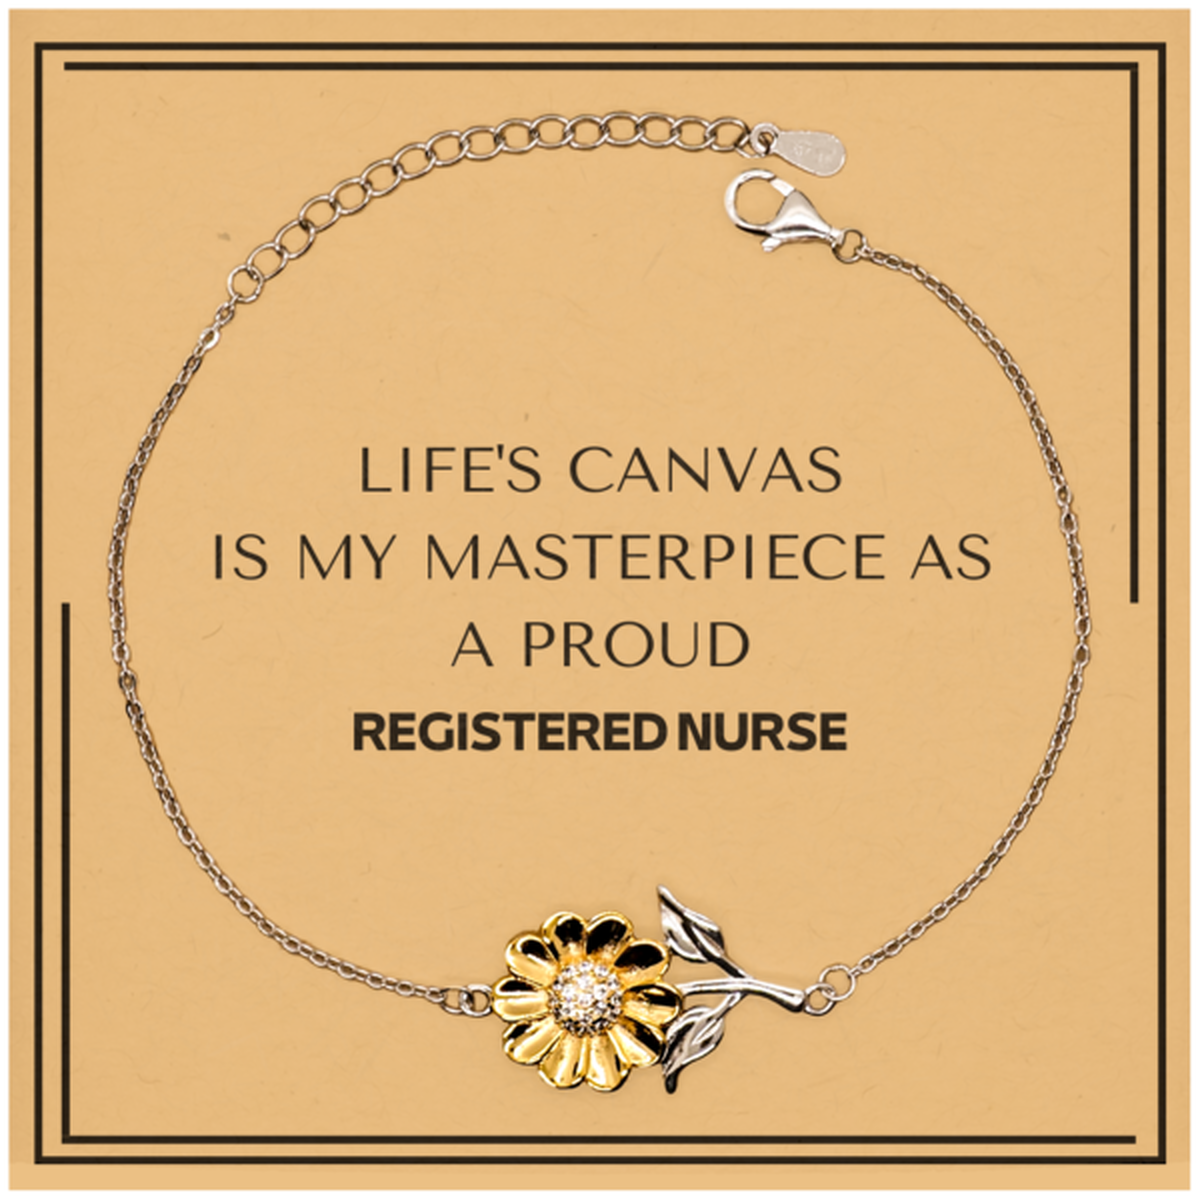 Proud Registered Nurse Gifts, Life's canvas is my masterpiece, Epic Birthday Christmas Unique Sunflower Bracelet For Registered Nurse, Coworkers, Men, Women, Friends